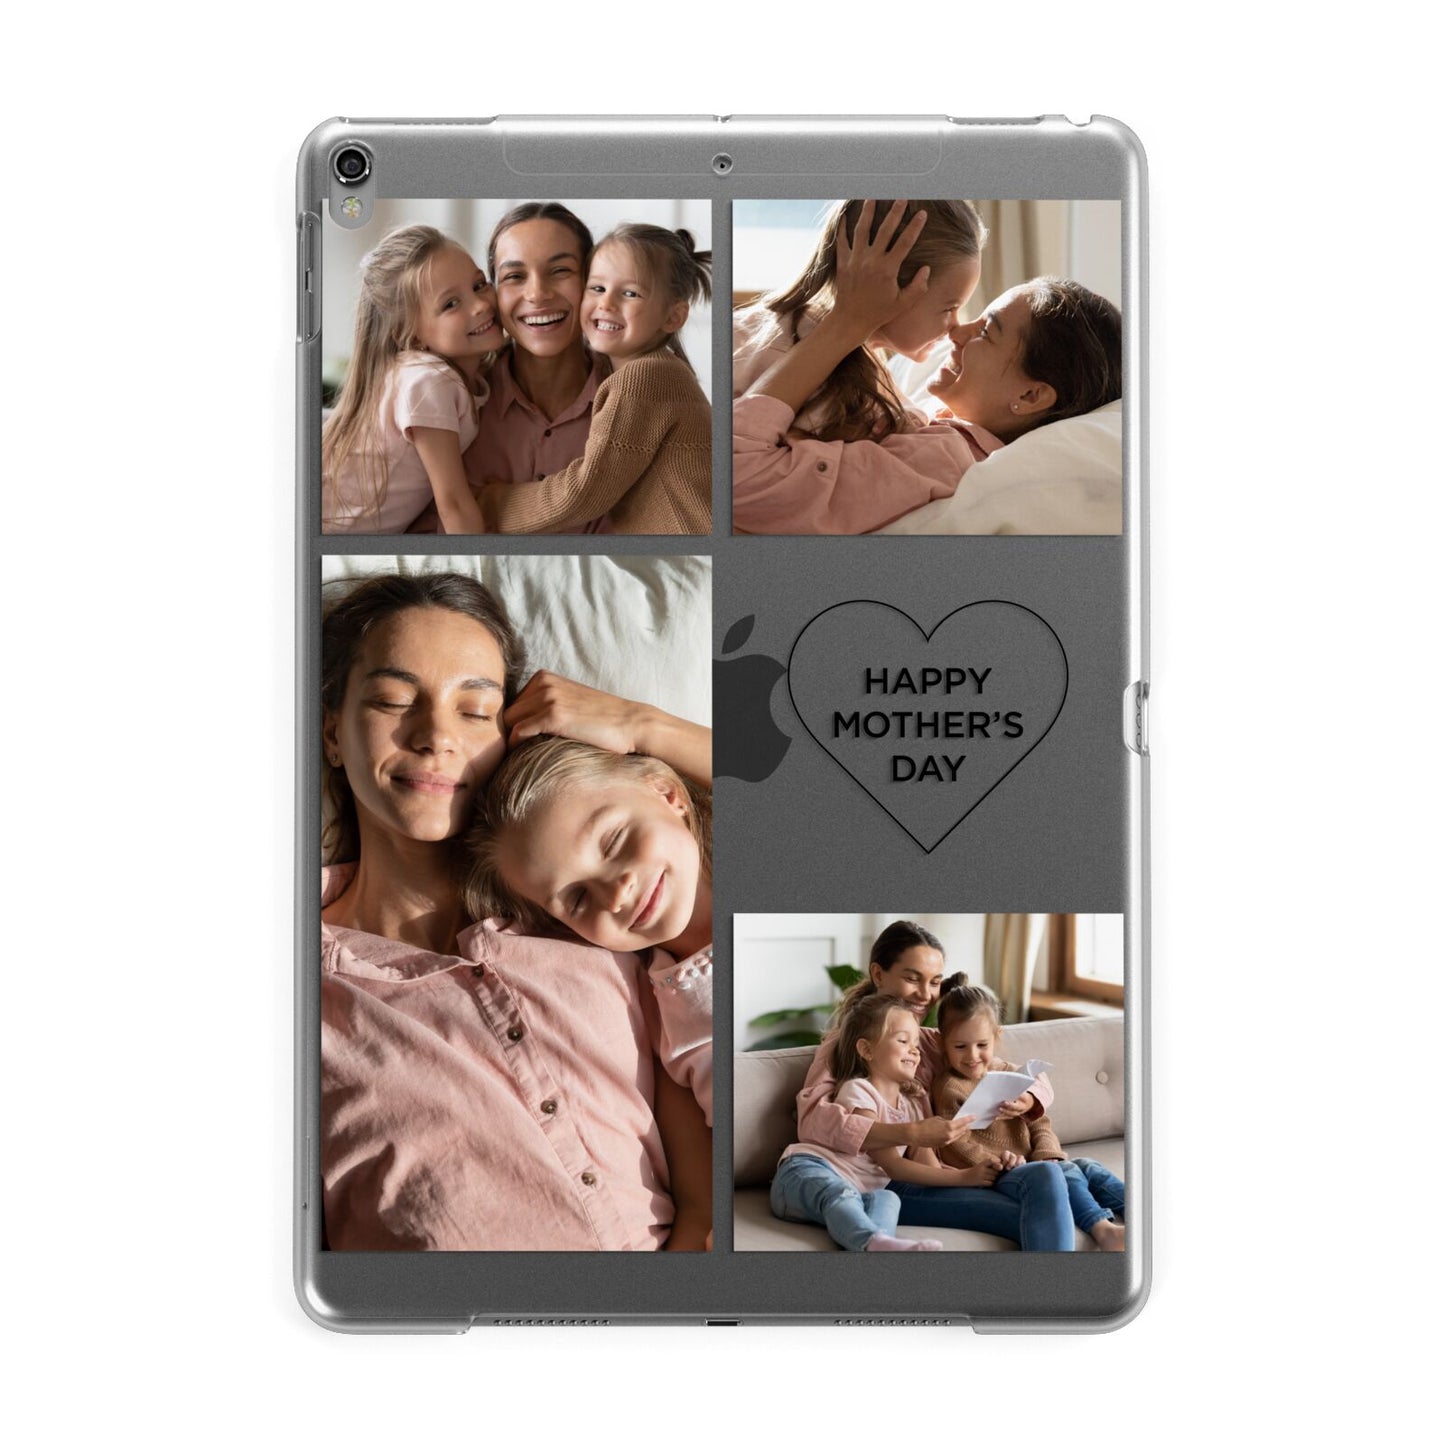 Mothers Day Multi Photo Tiles Apple iPad Grey Case